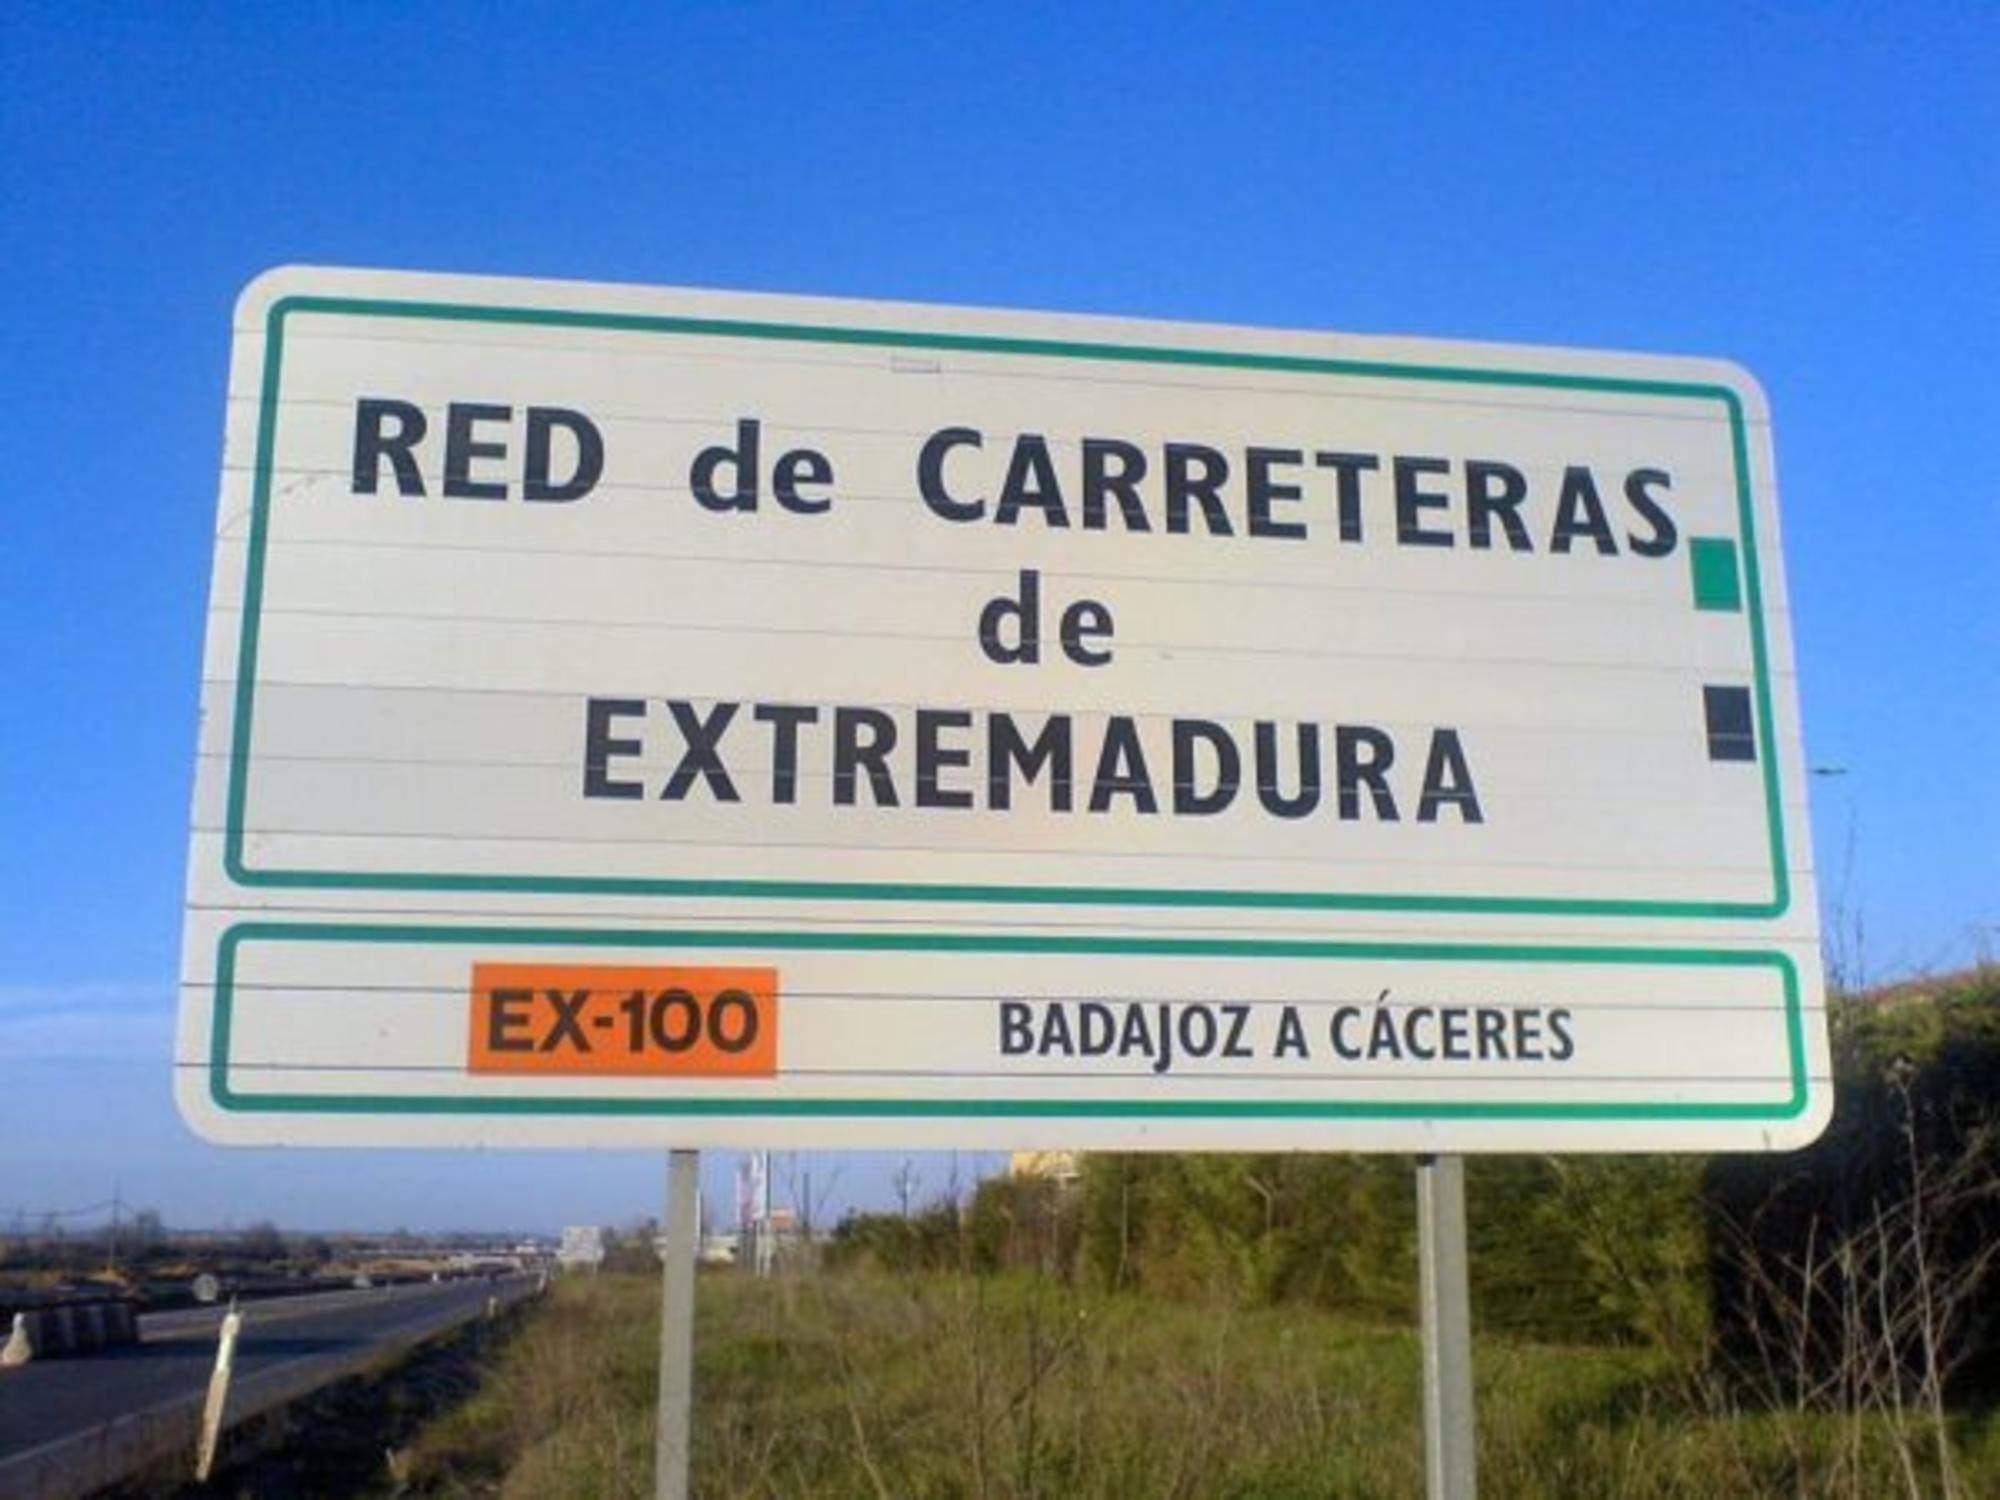 Carretera carreteras Extremadura